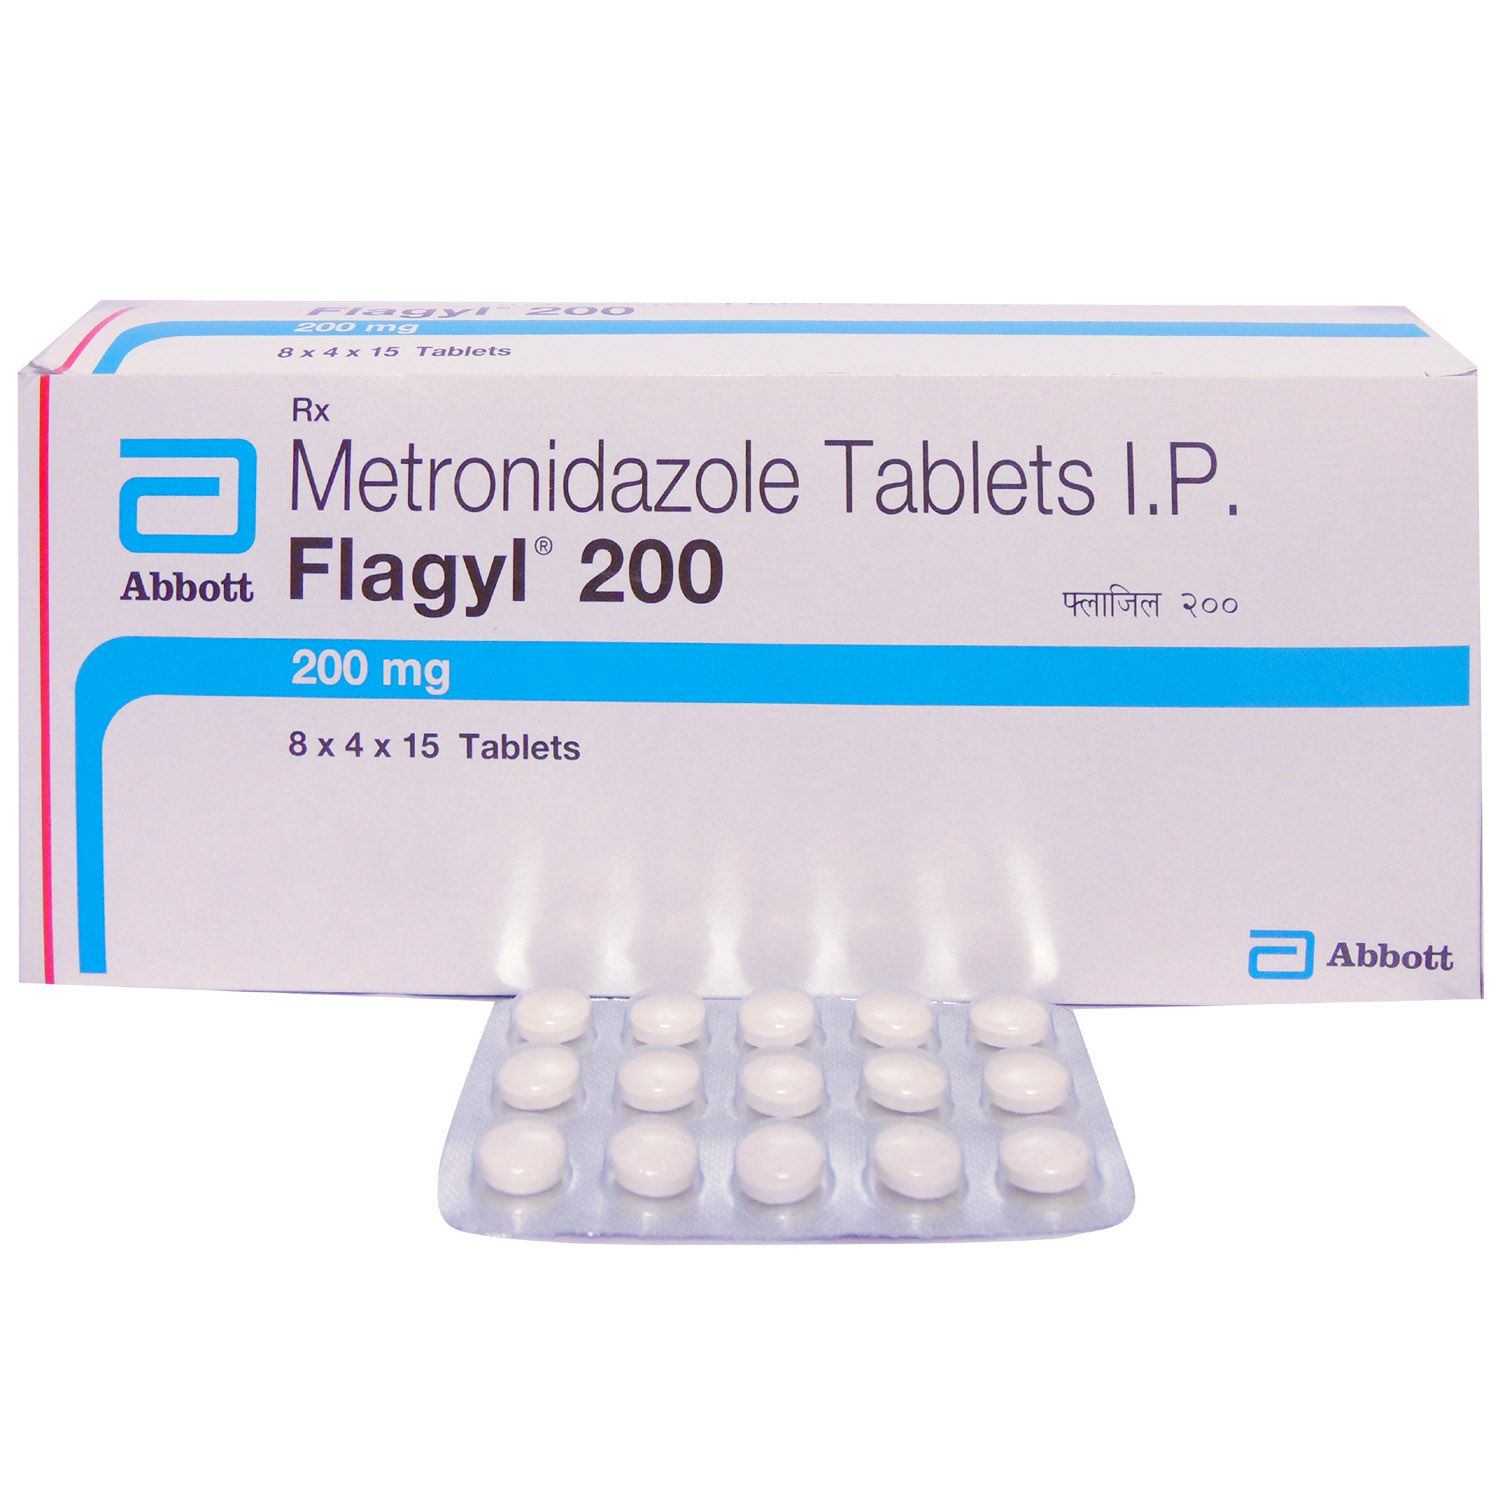 Flagyl Metronidazole (Oral